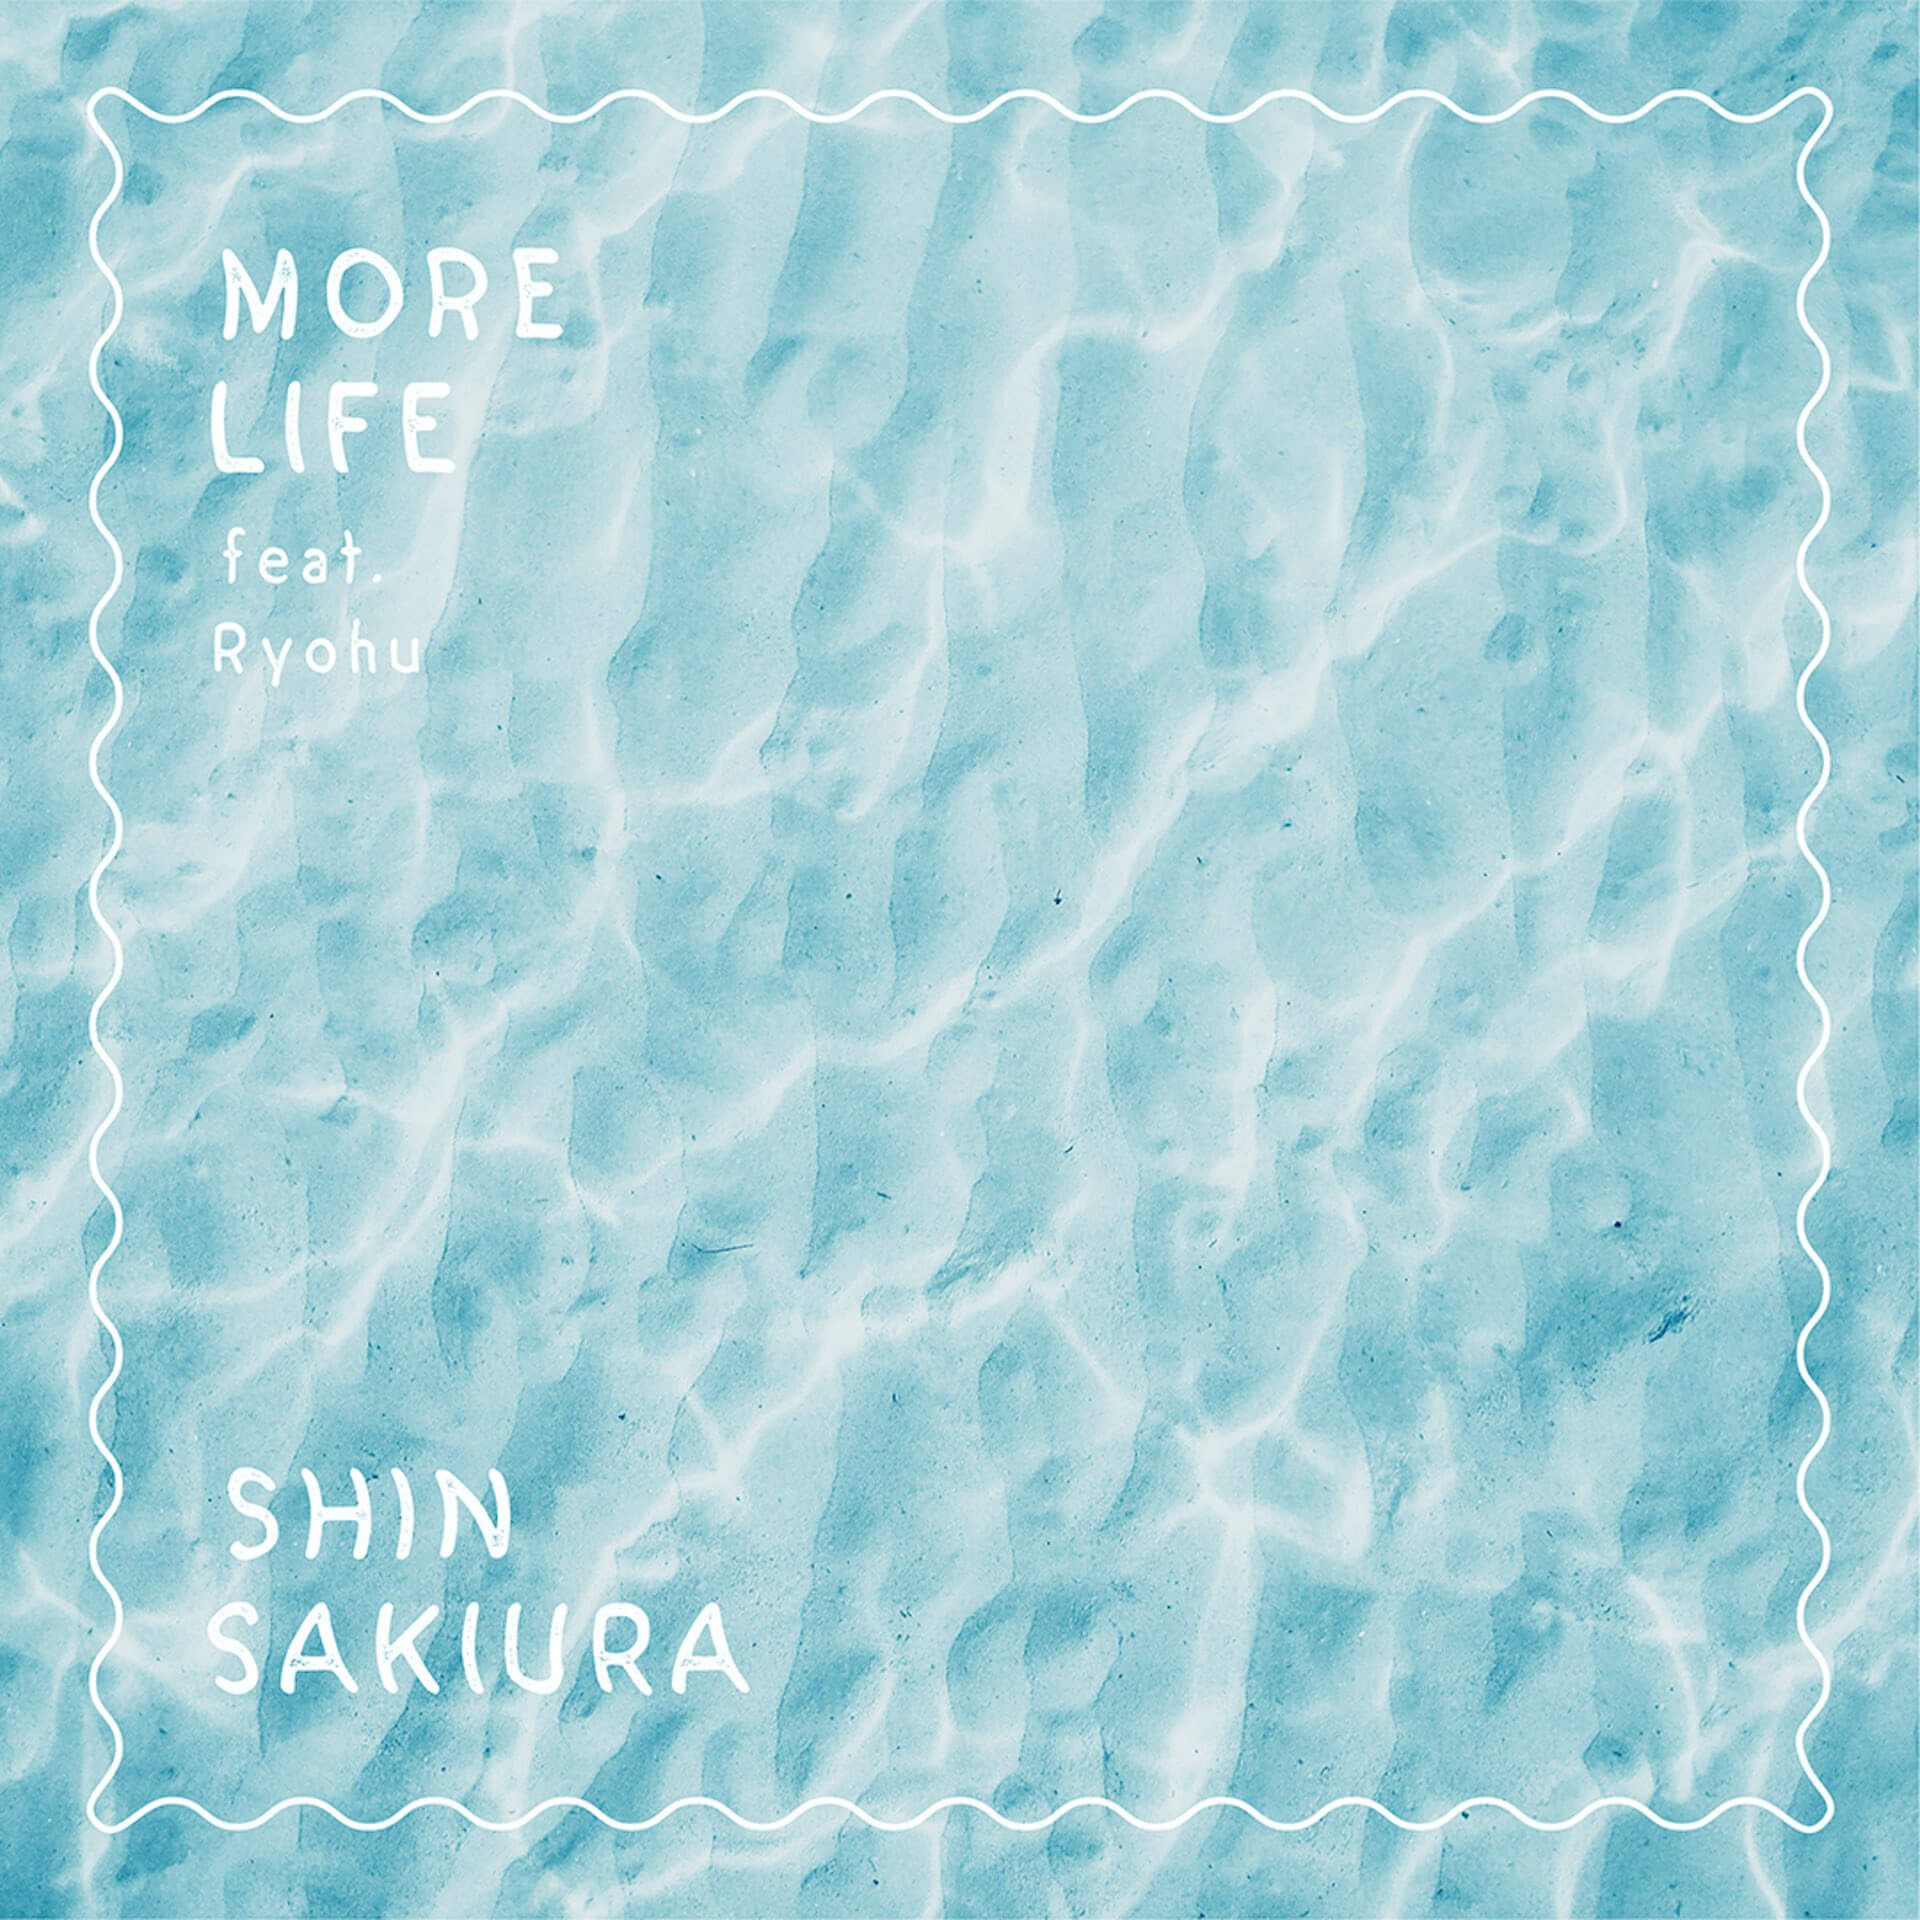 Shin SakiuraがKANDYTOWNのRyohuを迎えた“More Life”の7インチをリリース！リミックスverもデジタル配信開始 music200701_shinsakiura_ryohu_04